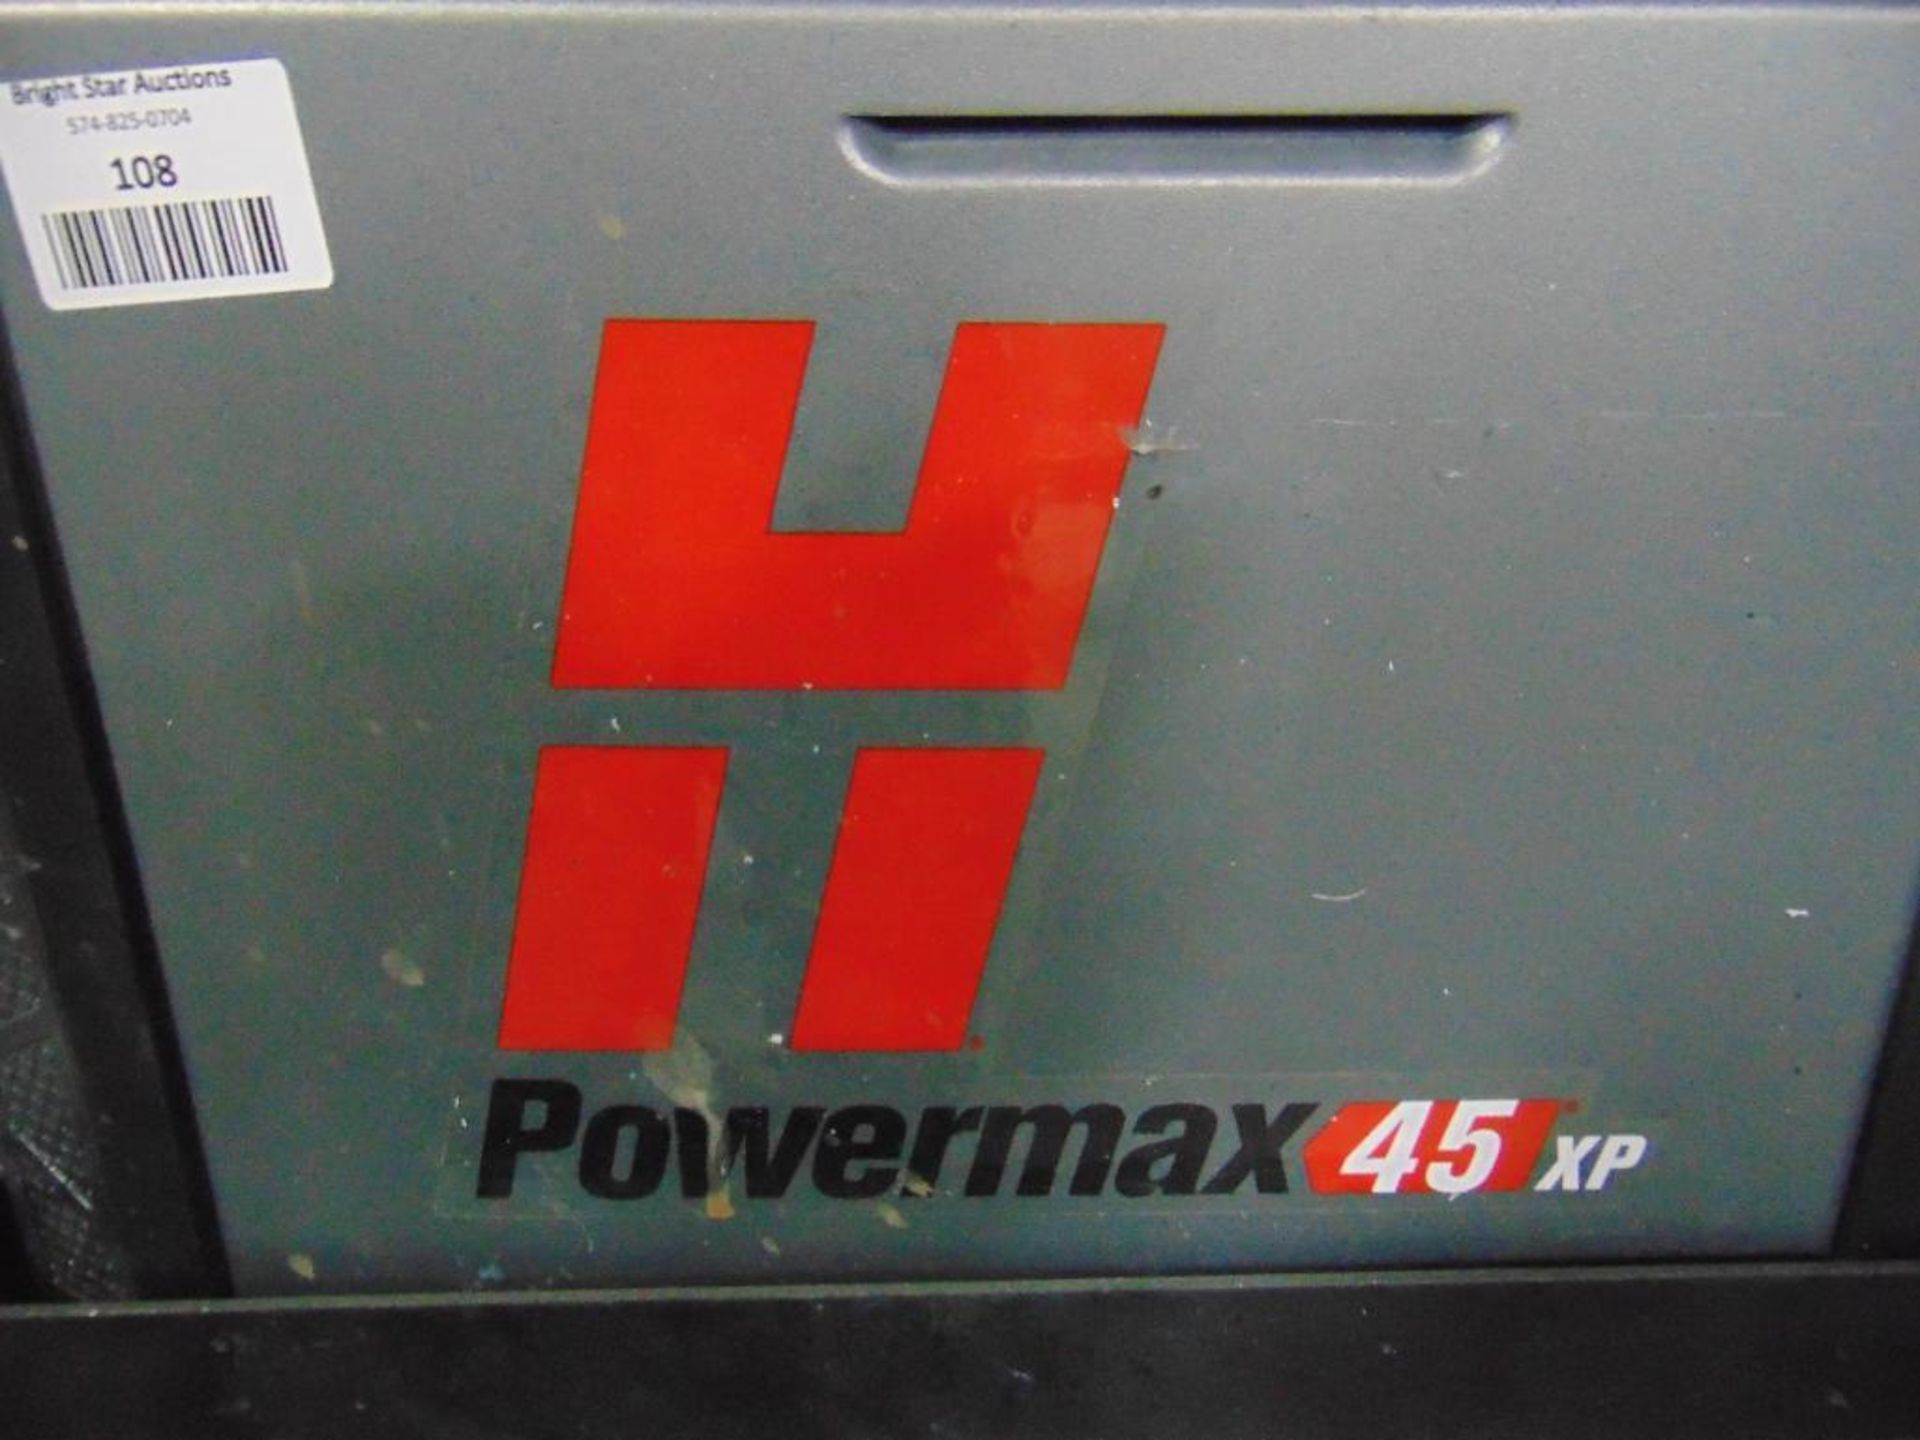 Powermax Hypertherm 45 XP Plasma Cutter - Image 5 of 5